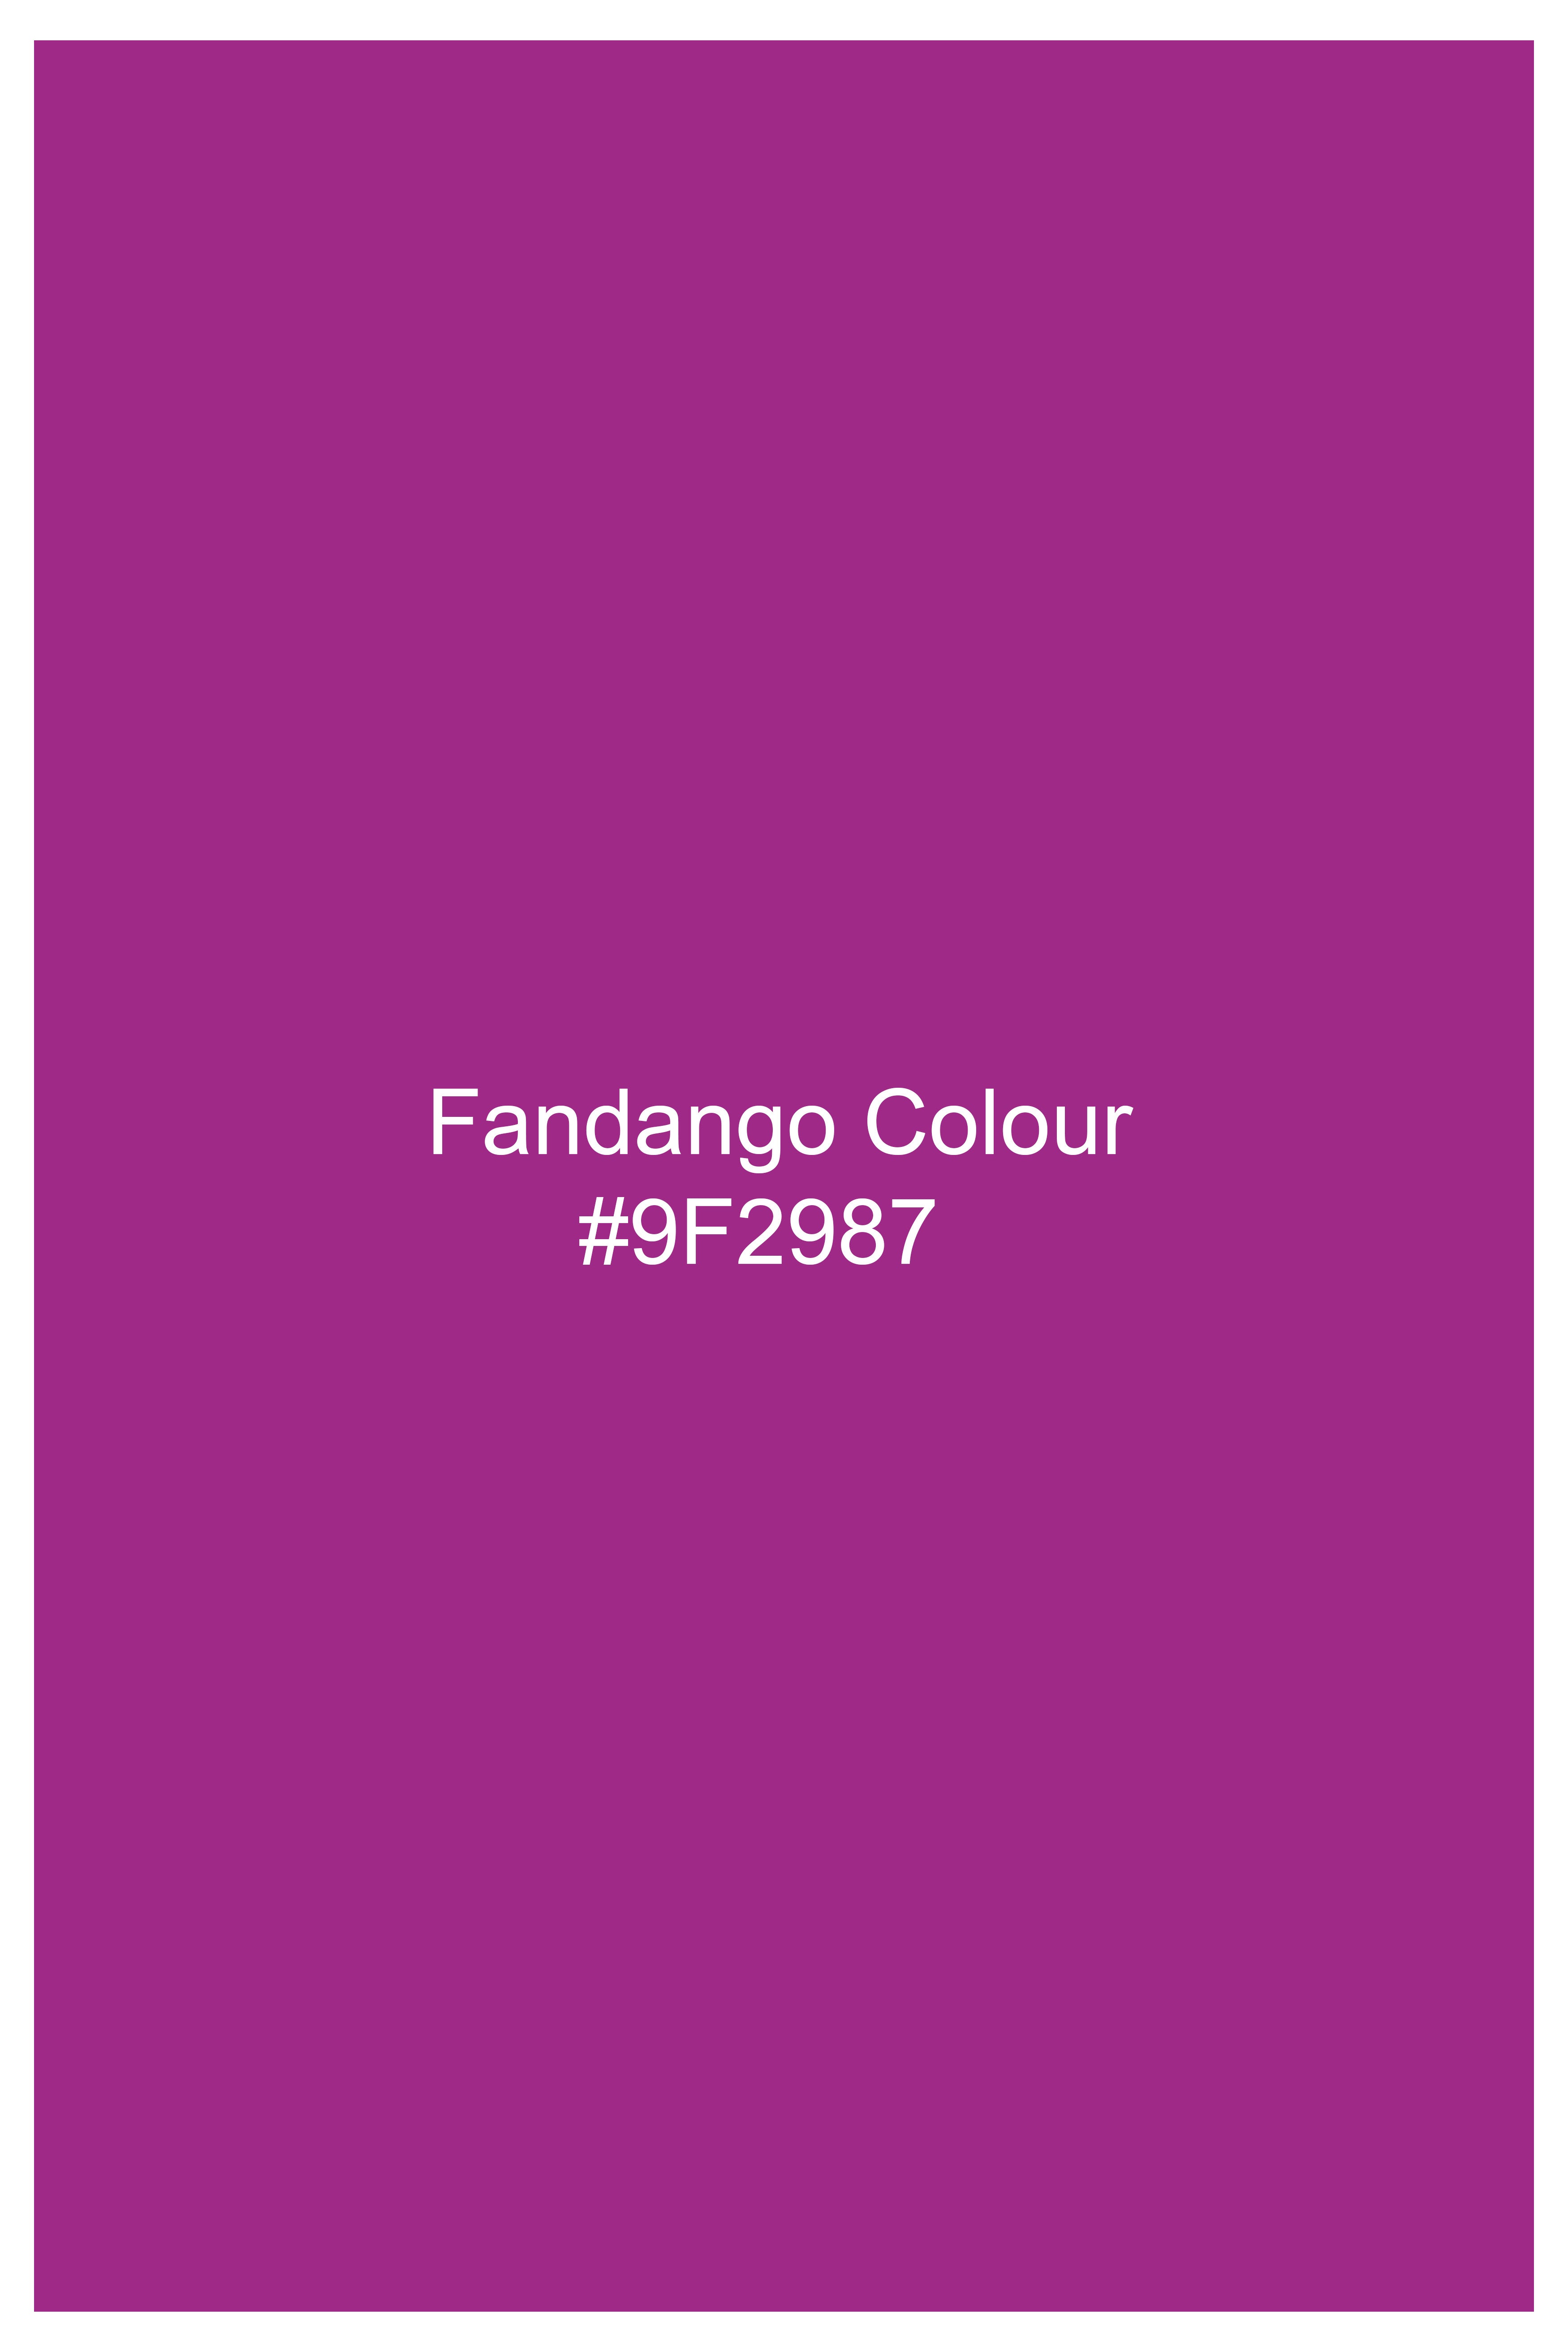 Fandango Pink Hand Painted Premium Cotton Designer Shirt 7970-BLK-ART-38, 7970-BLK-ART-H-38, 7970-BLK-ART-39, 7970-BLK-ART-H-39, 7970-BLK-ART-40, 7970-BLK-ART-H-40, 7970-BLK-ART-42, 7970-BLK-ART-H-42, 7970-BLK-ART-44, 7970-BLK-ART-H-44, 7970-BLK-ART-46, 7970-BLK-ART-H-46, 7970-BLK-ART-48, 7970-BLK-ART-H-48, 7970-BLK-ART-50, 7970-BLK-ART-H-50, 7970-BLK-ART-52, 7970-BLK-ART-H-52